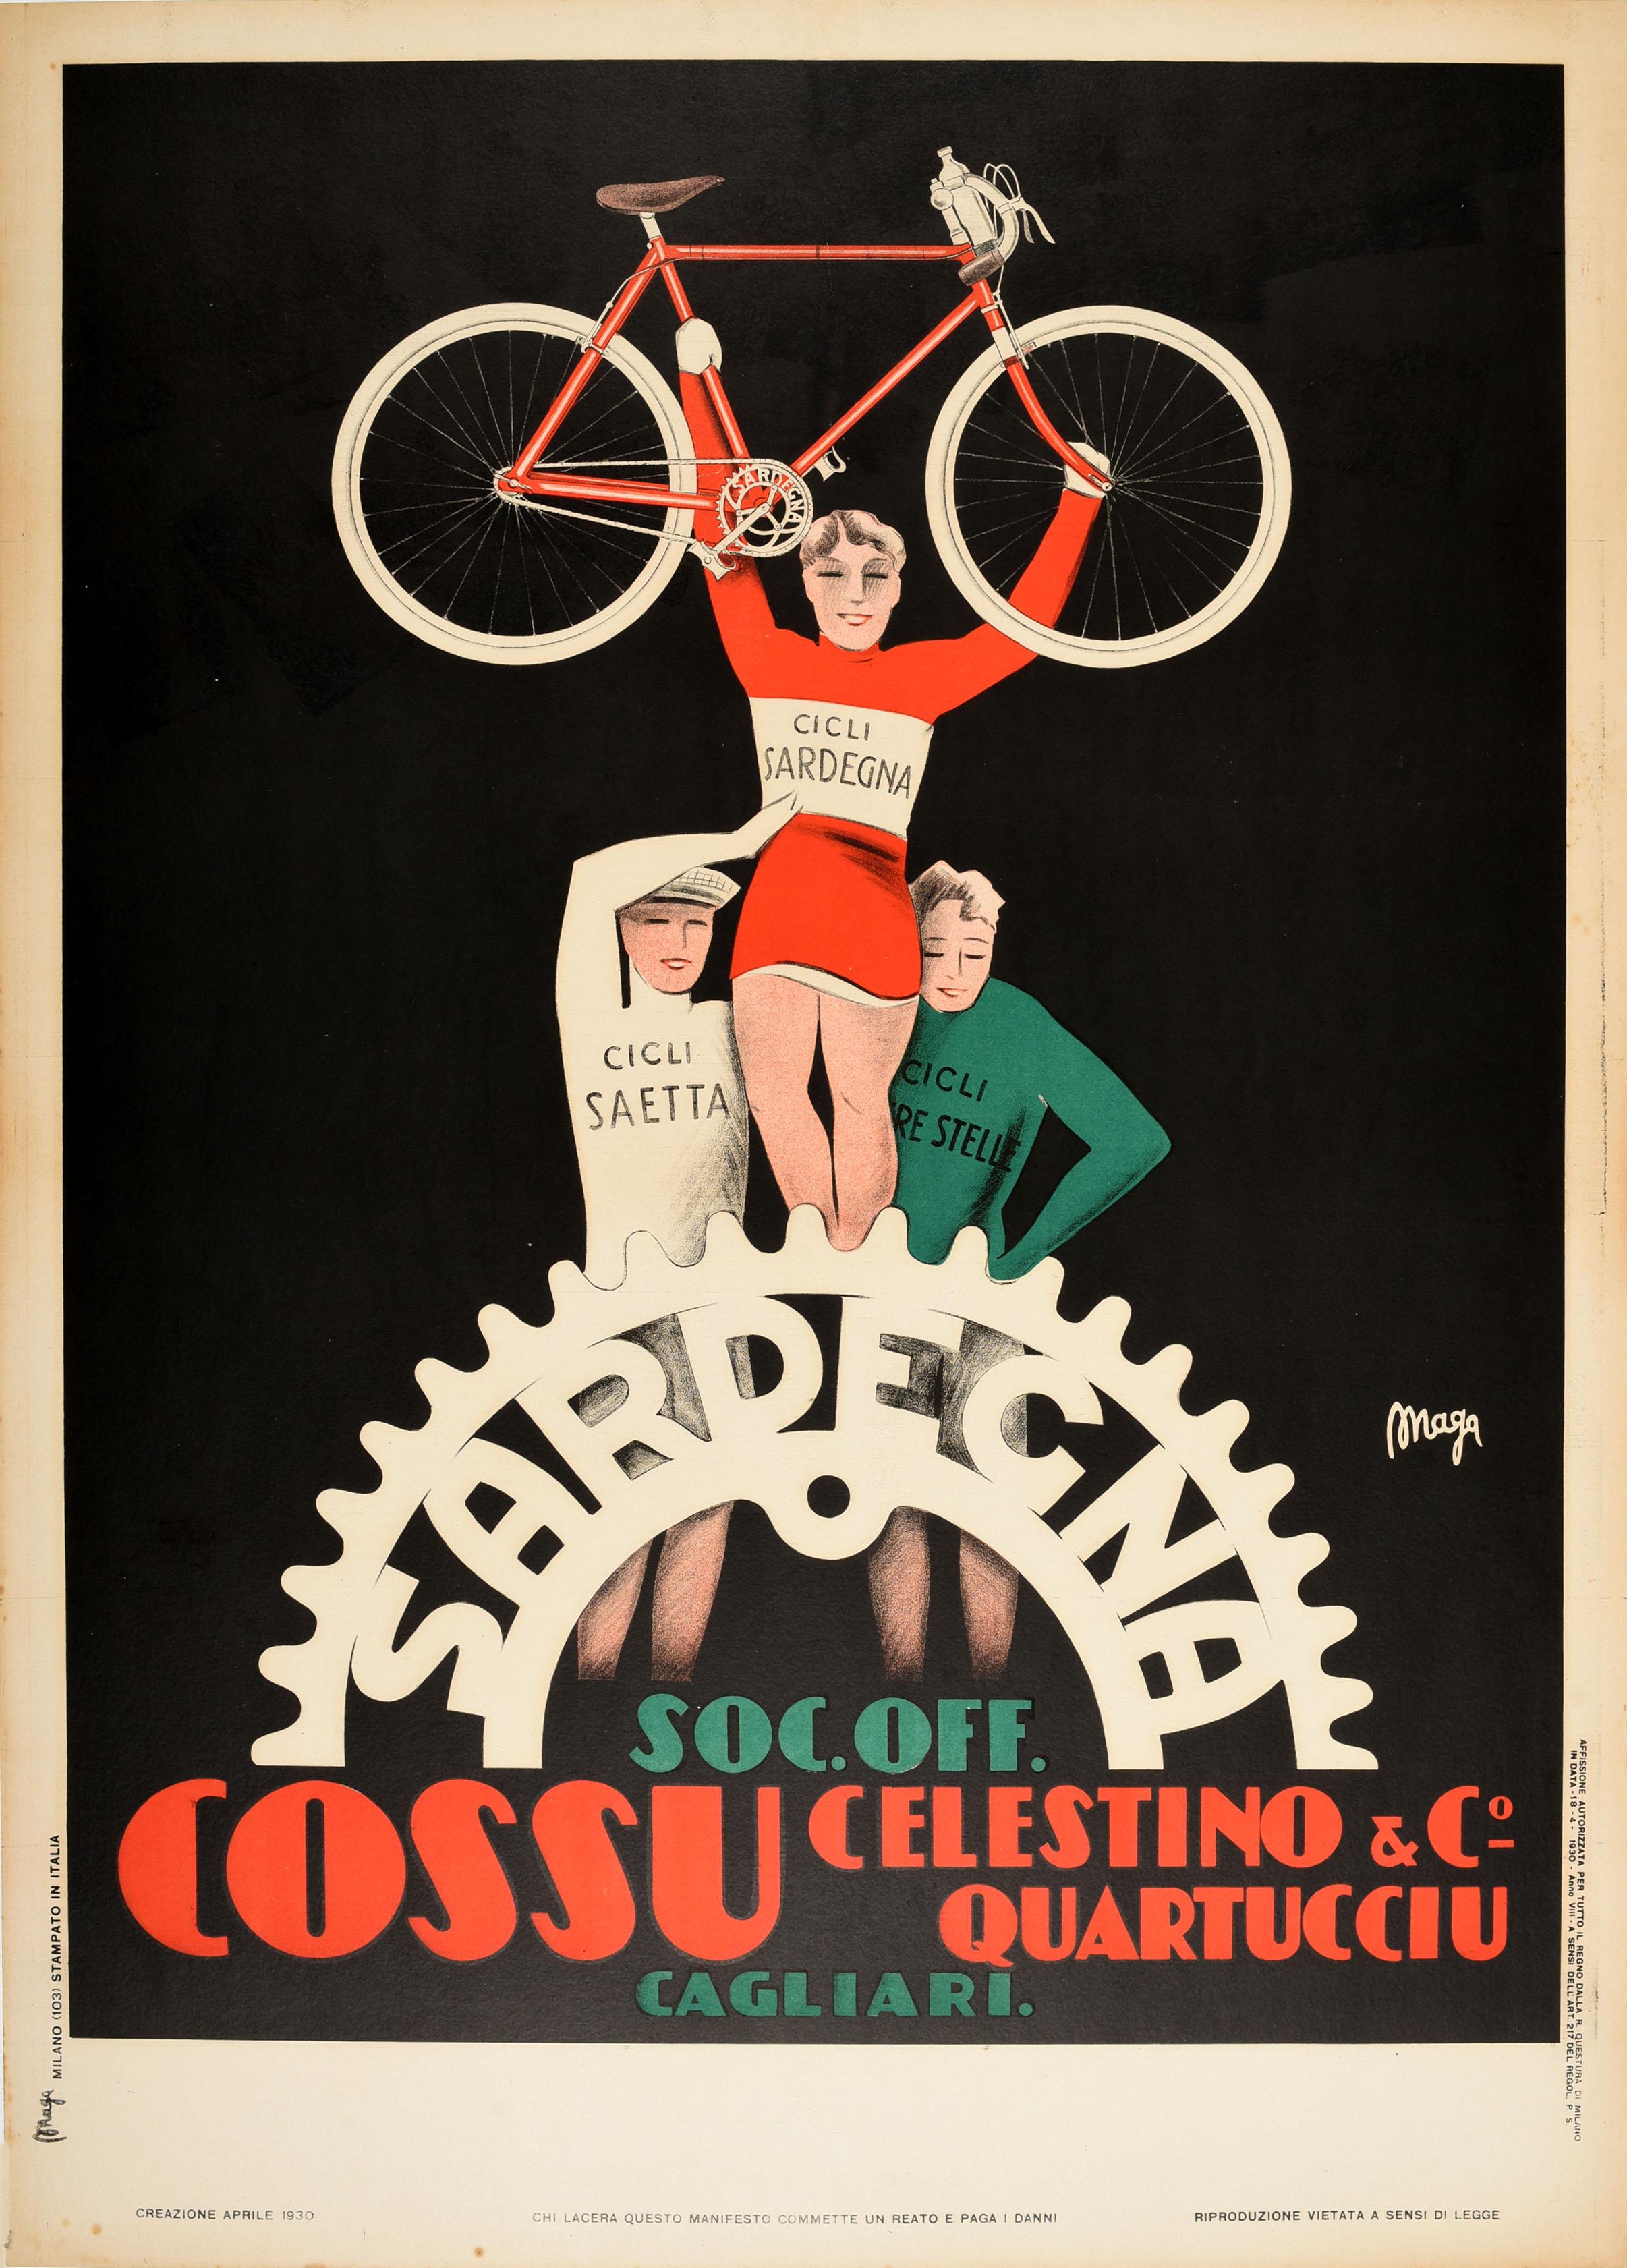 Original vintage sport poster for Sardegna Soc. Off. Cossu Celestino & Co. Quartucciu Cagliari featuring a colourful Art Deco design by Maga (Guiseppe Magagnoli; 1878-1933) depicting three cyclists in red, white and green Cicli Sardegna / Sardinia